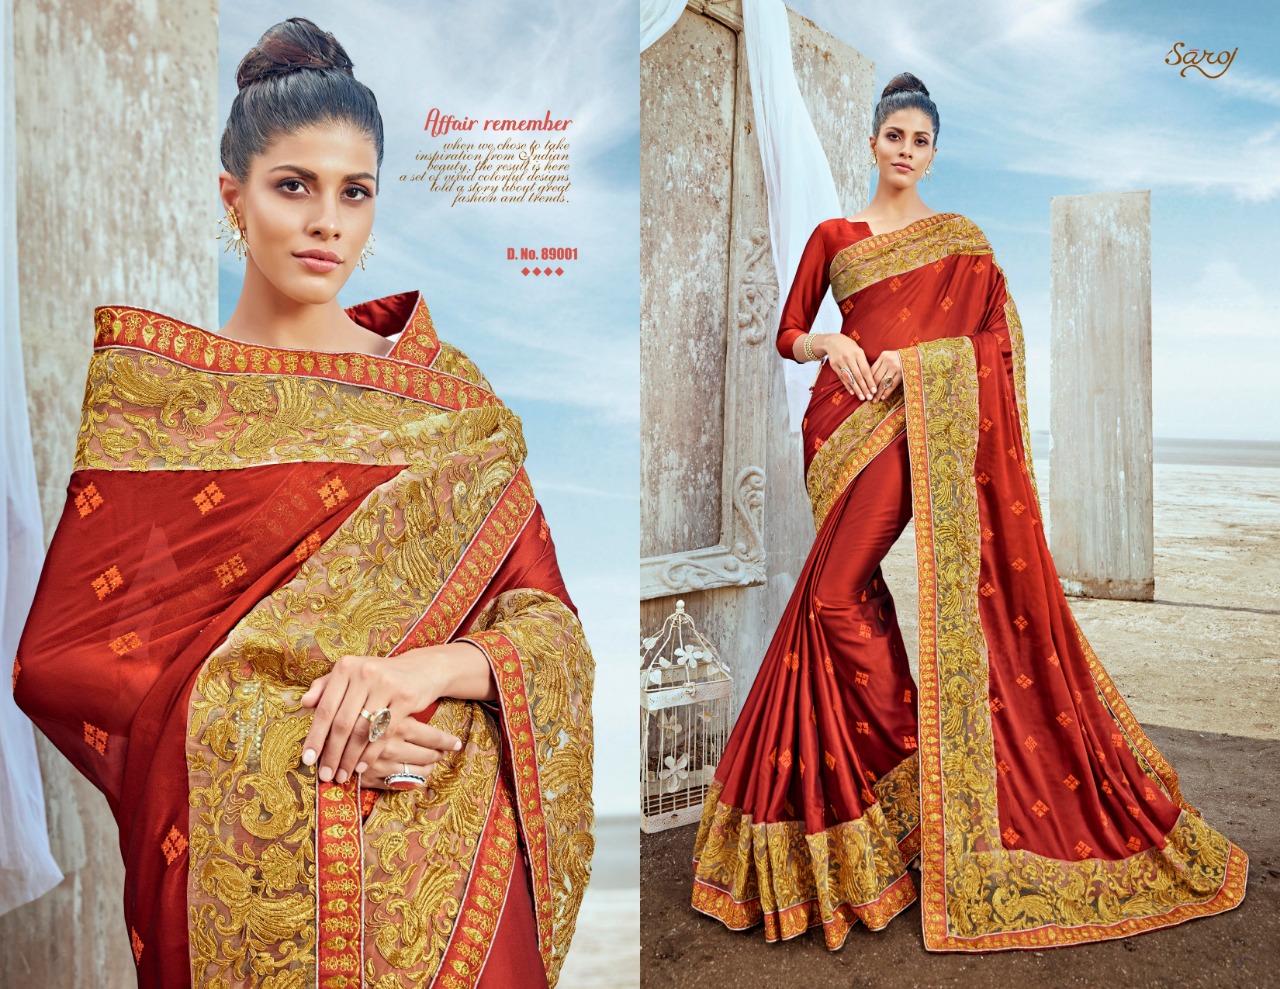 Saroj Saree Fashion Yug 89001